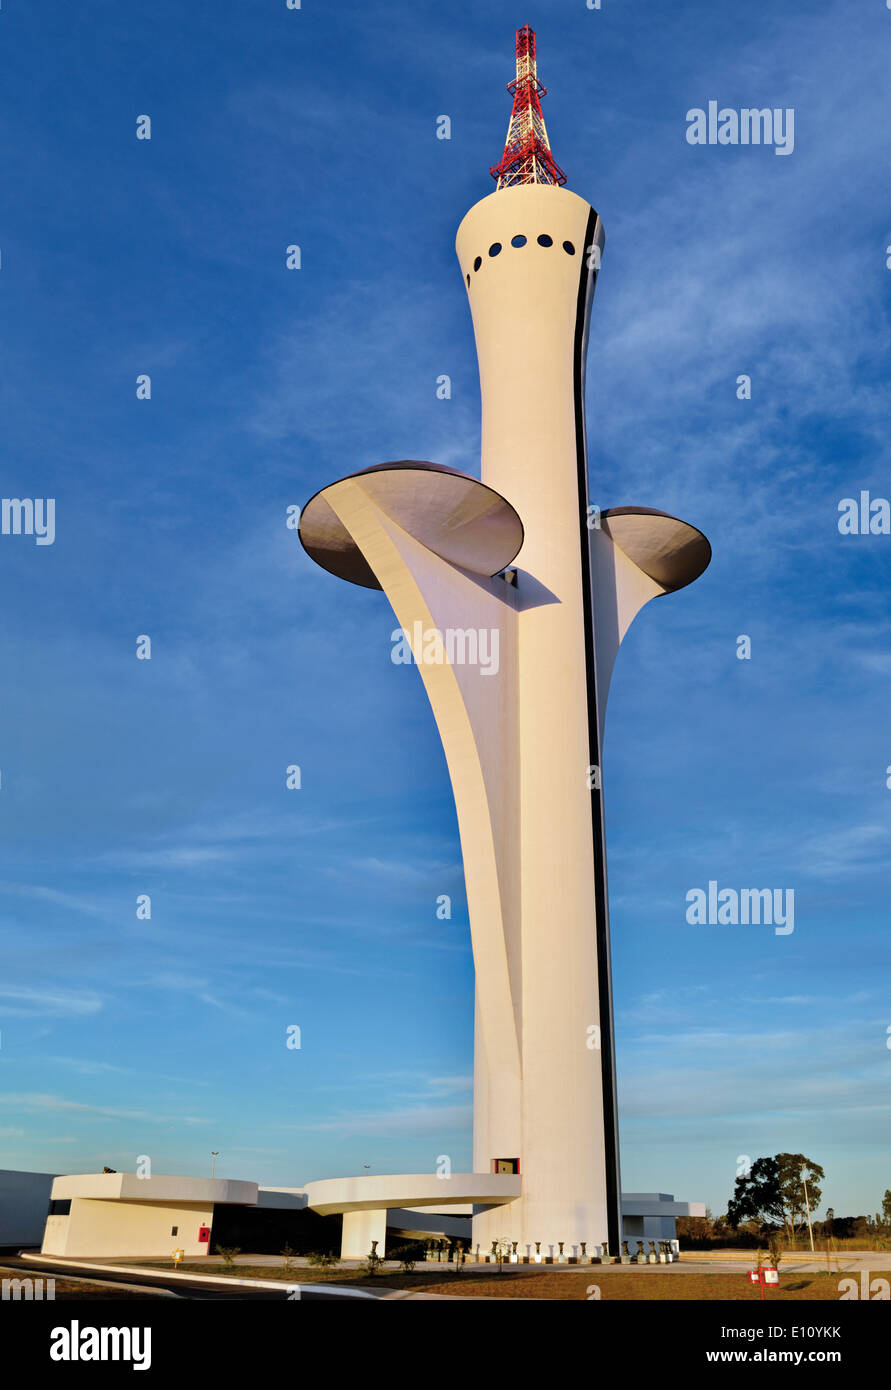 Brazil, Brasilia: Digital TV Tower by Oscar Niemeyer Stock Photo